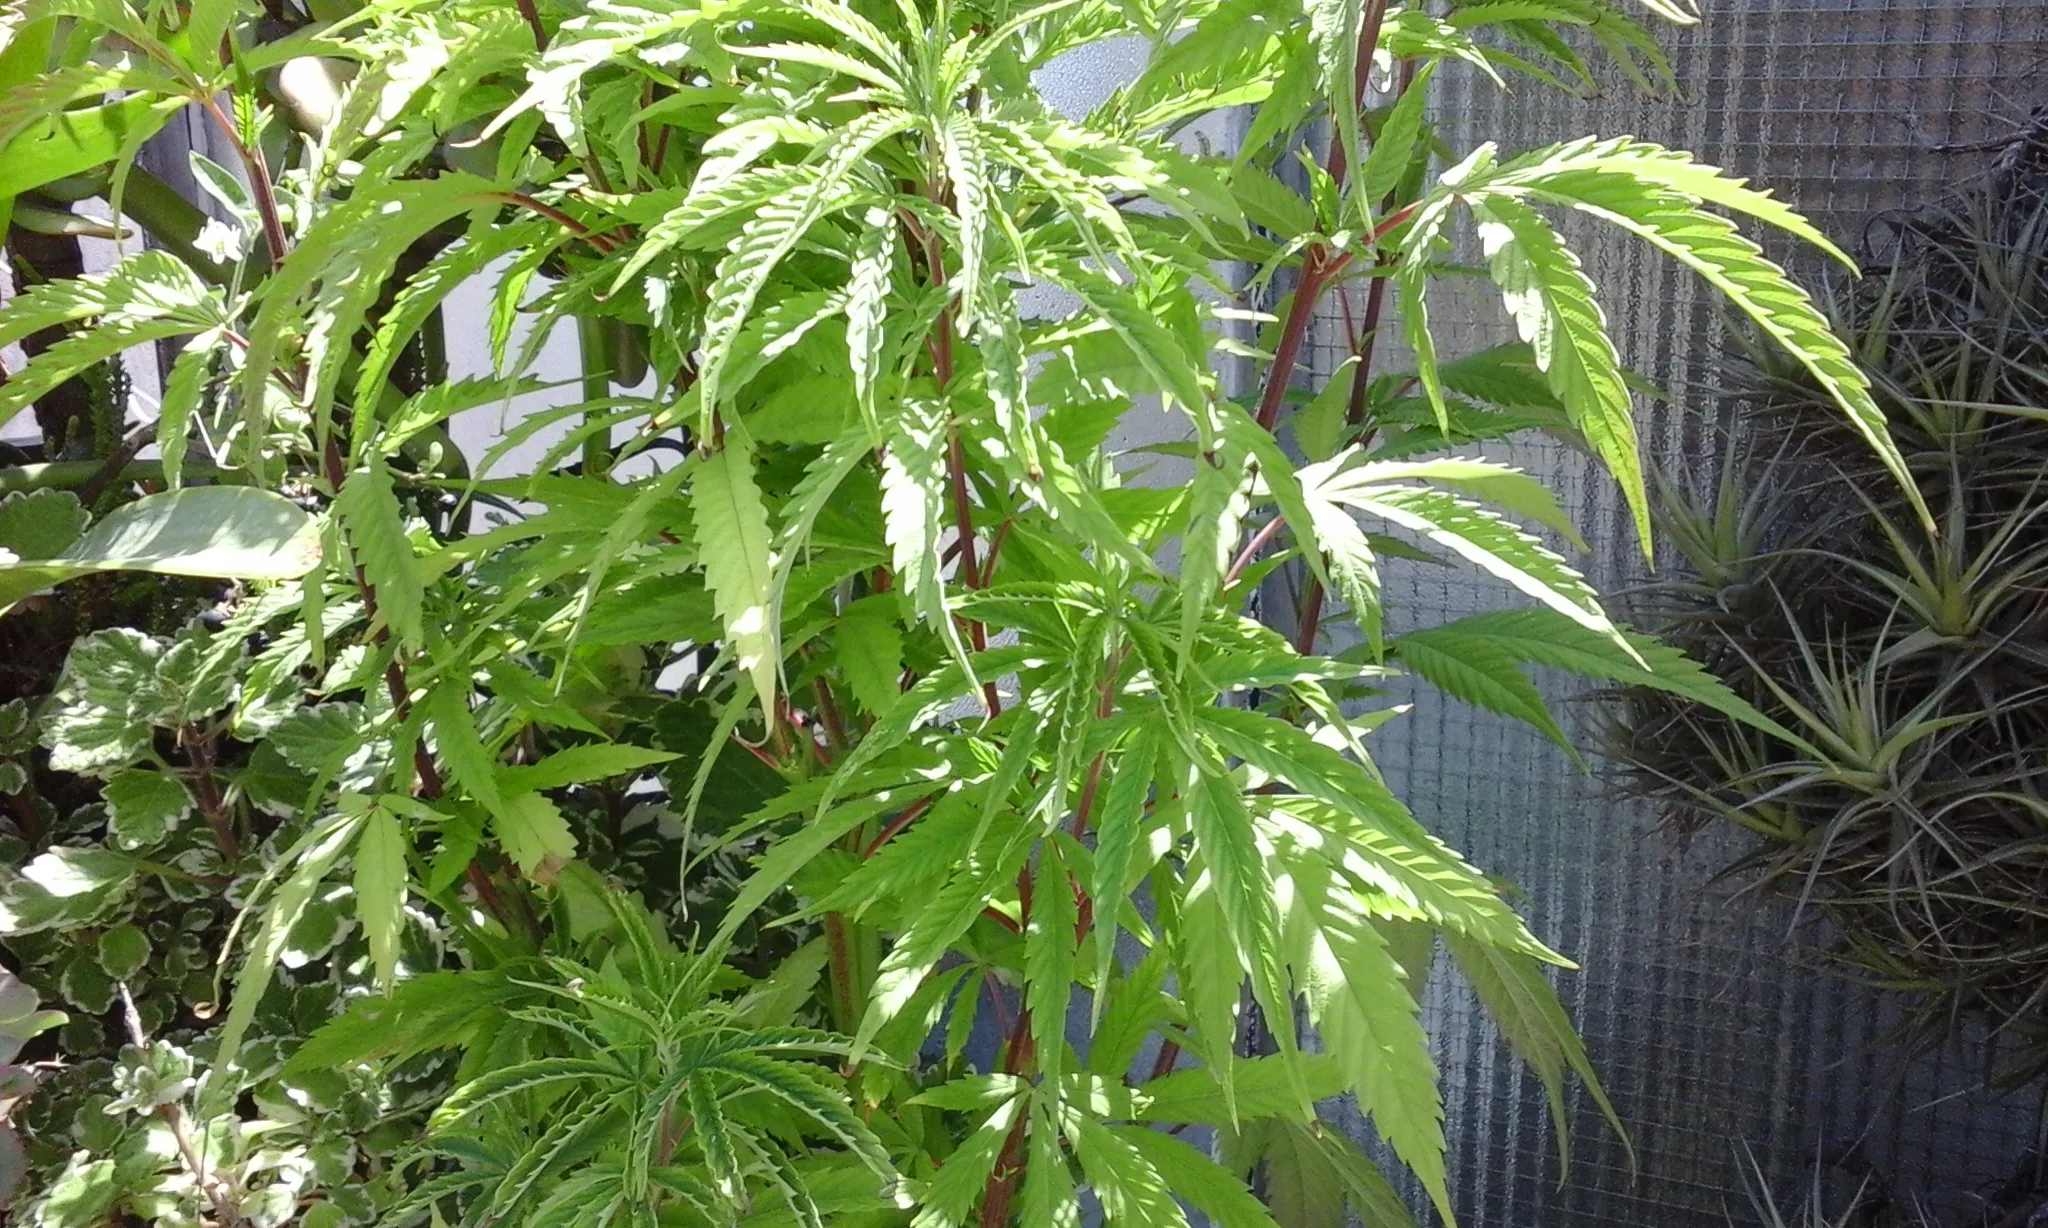 La planta Cannabis indica cultivada en una terrassa per autoconsum